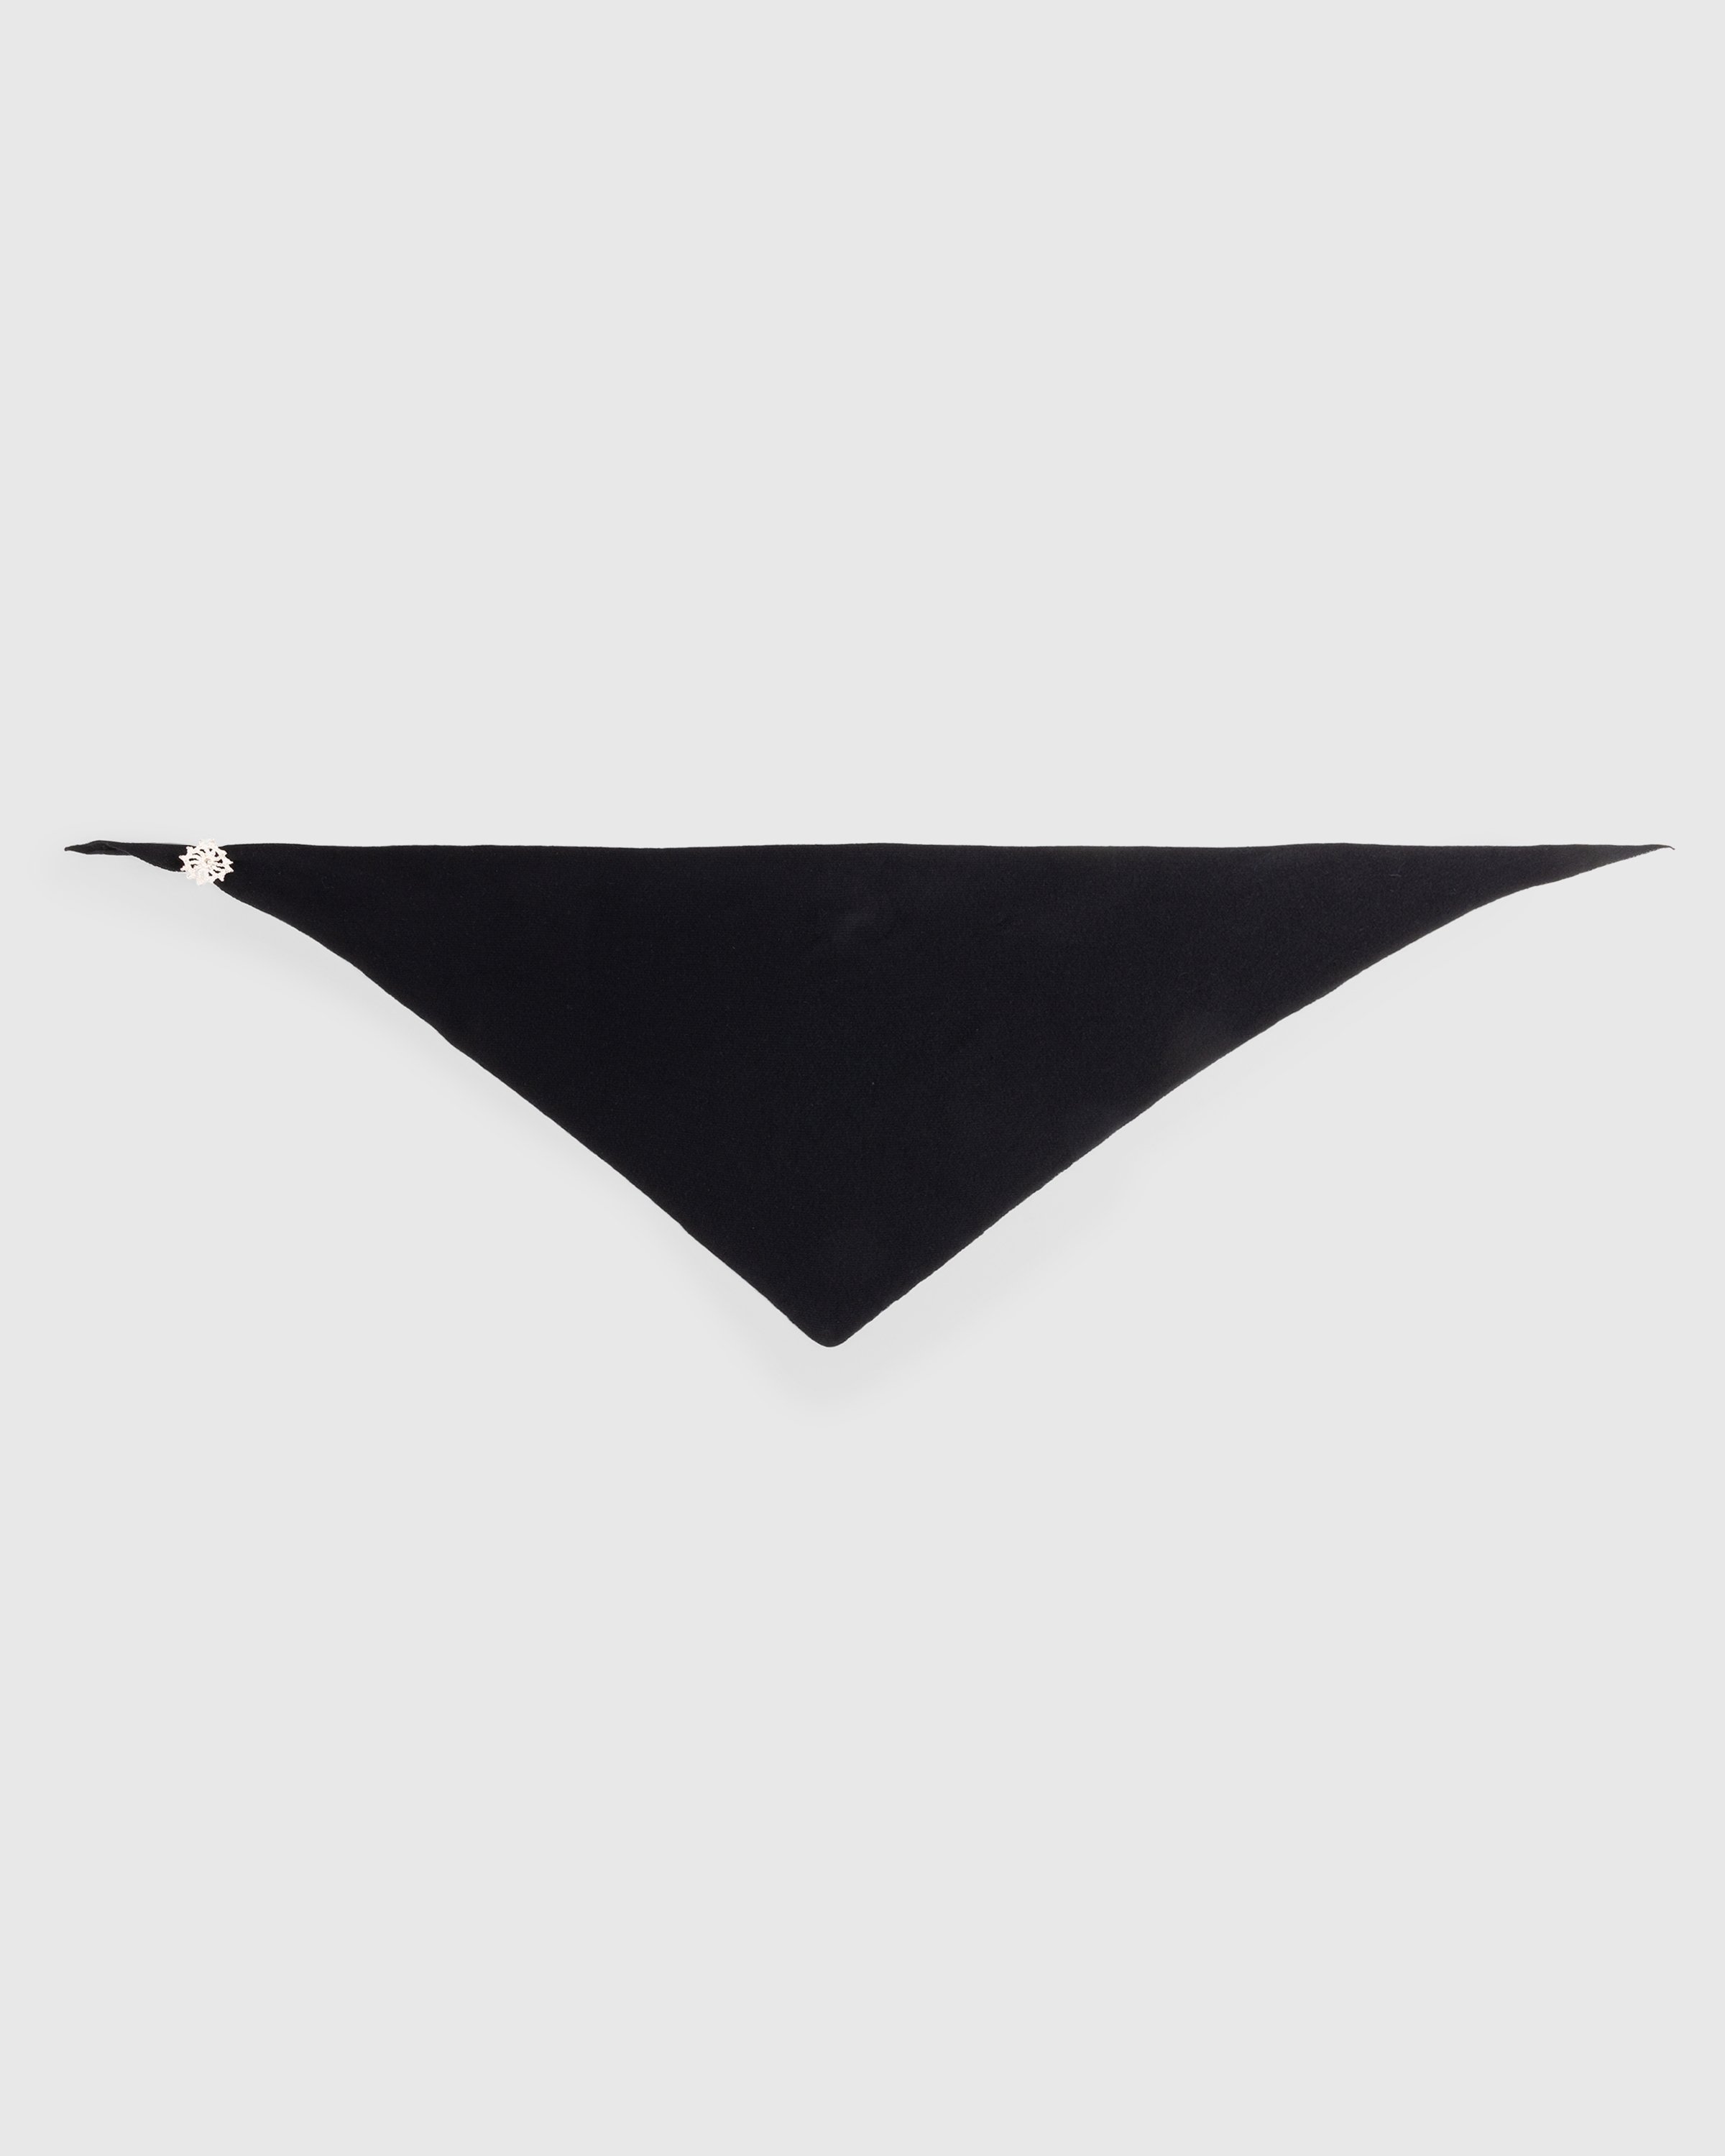 SSU - Cashmere Jewel Foulard Black/Shield - Accessories - Black - Image 2